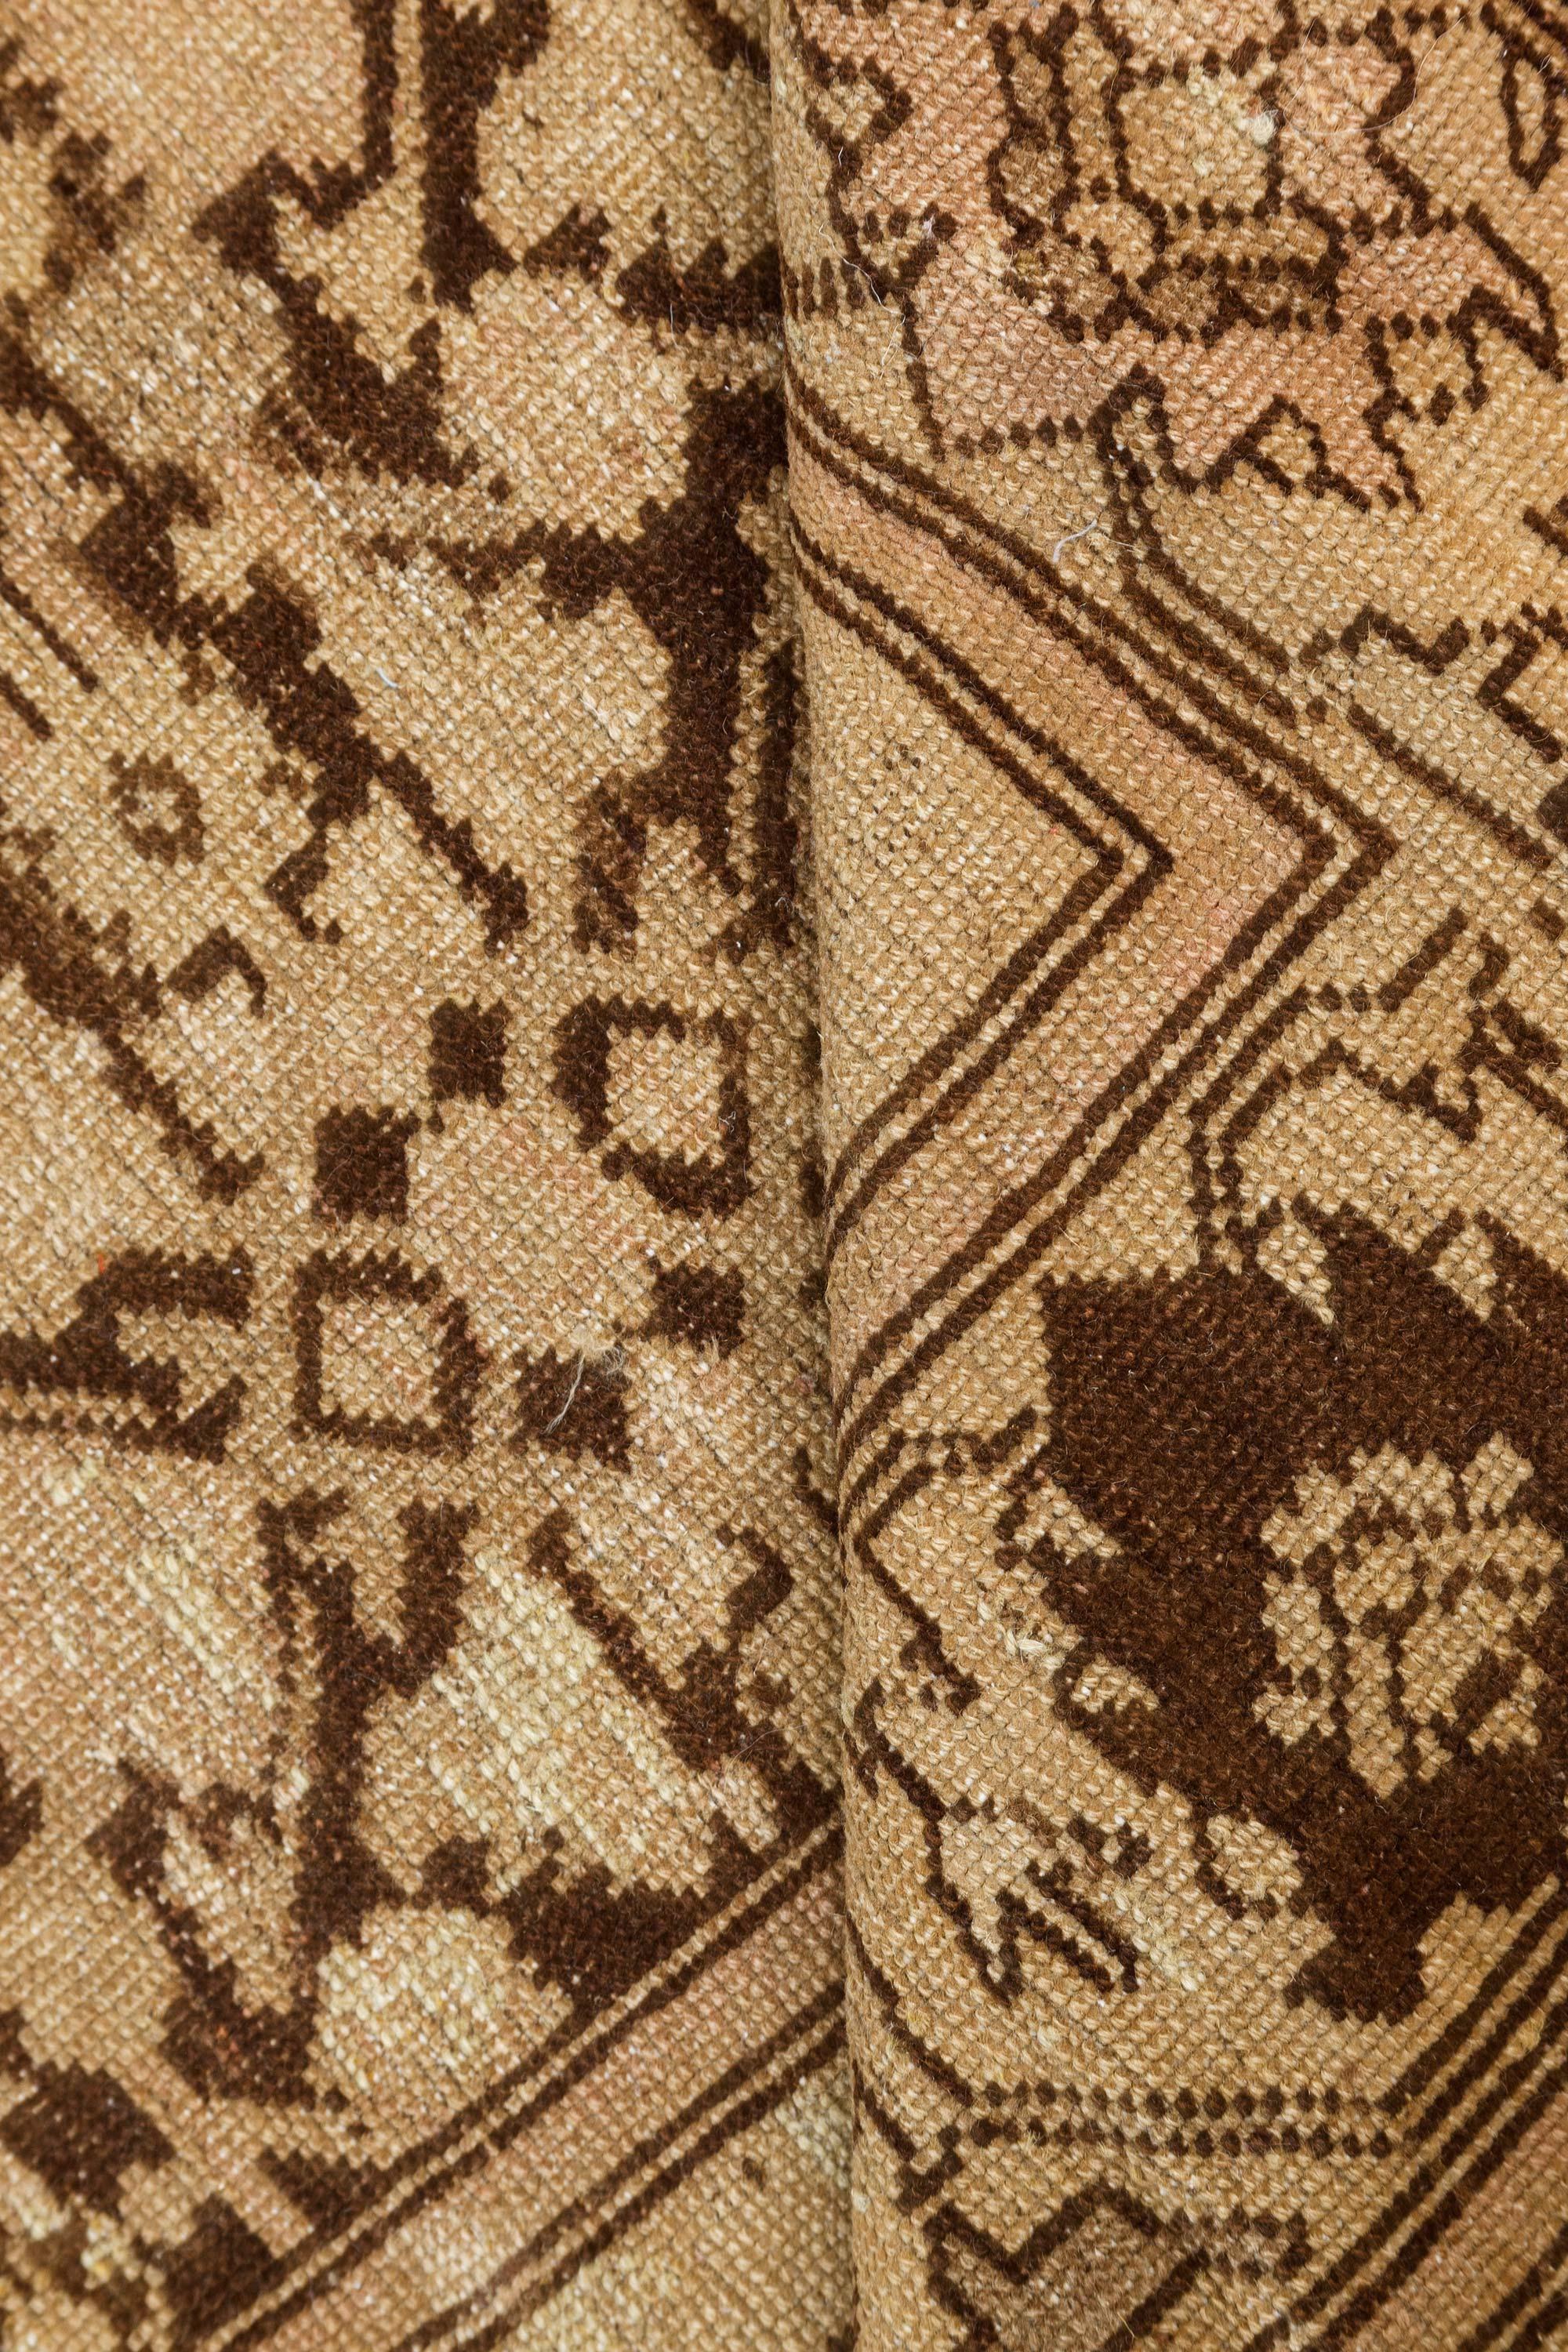 Antique Karabagh Botanic Brown, Beige Handmade Wool Rug
Size: 6'8